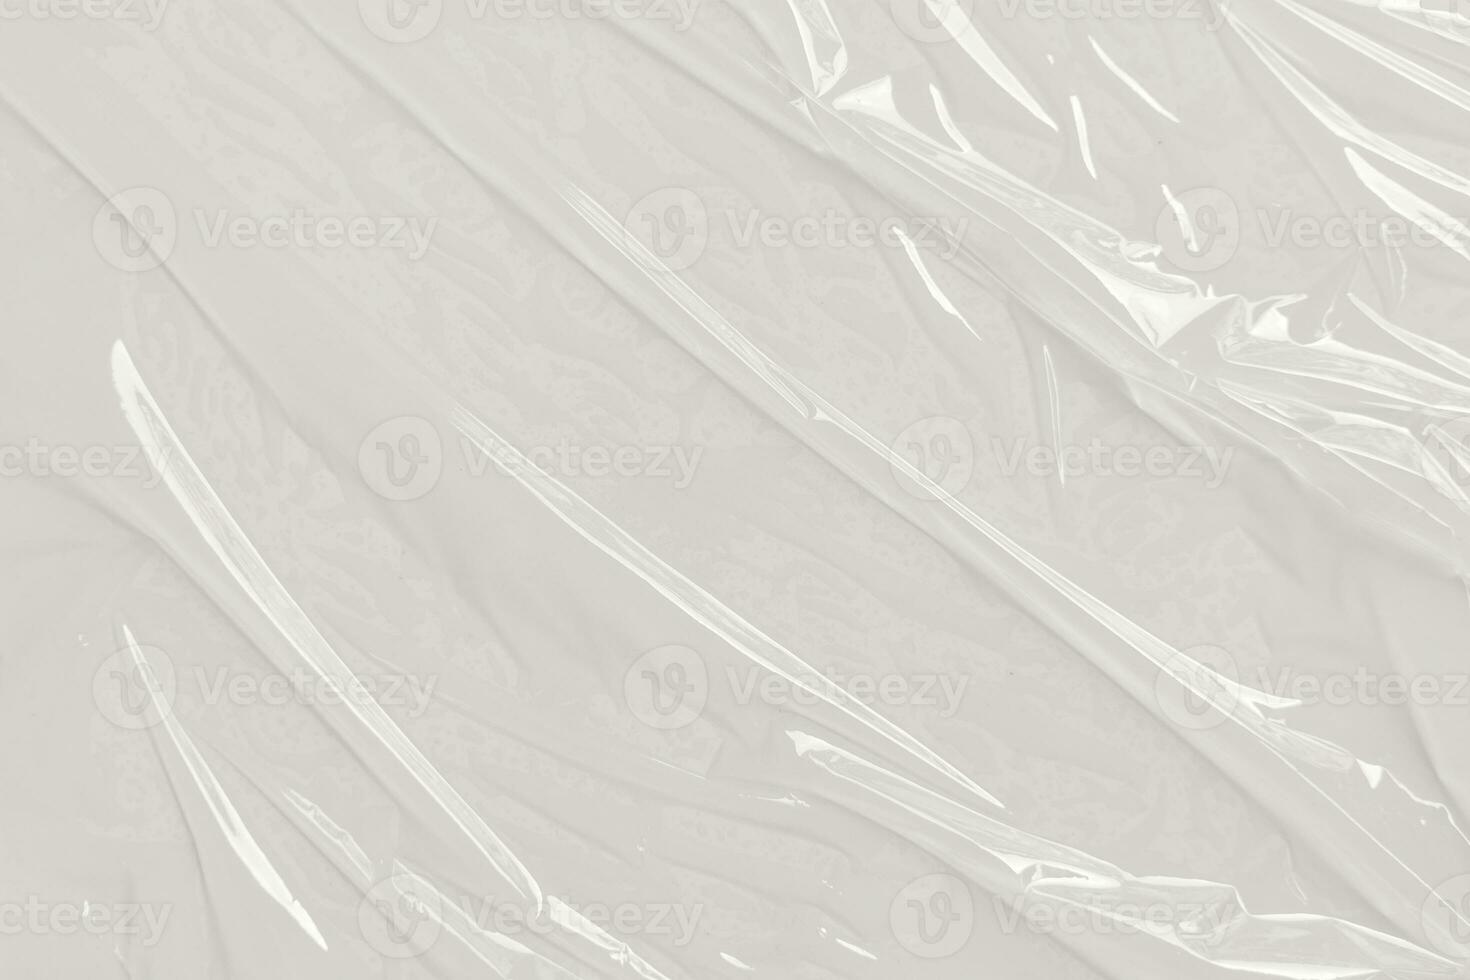 plastic transparant cellofaan zak Aan wit achtergrond. wit plastic film inpakken structuur achtergrond. wit plastic zak structuur foto